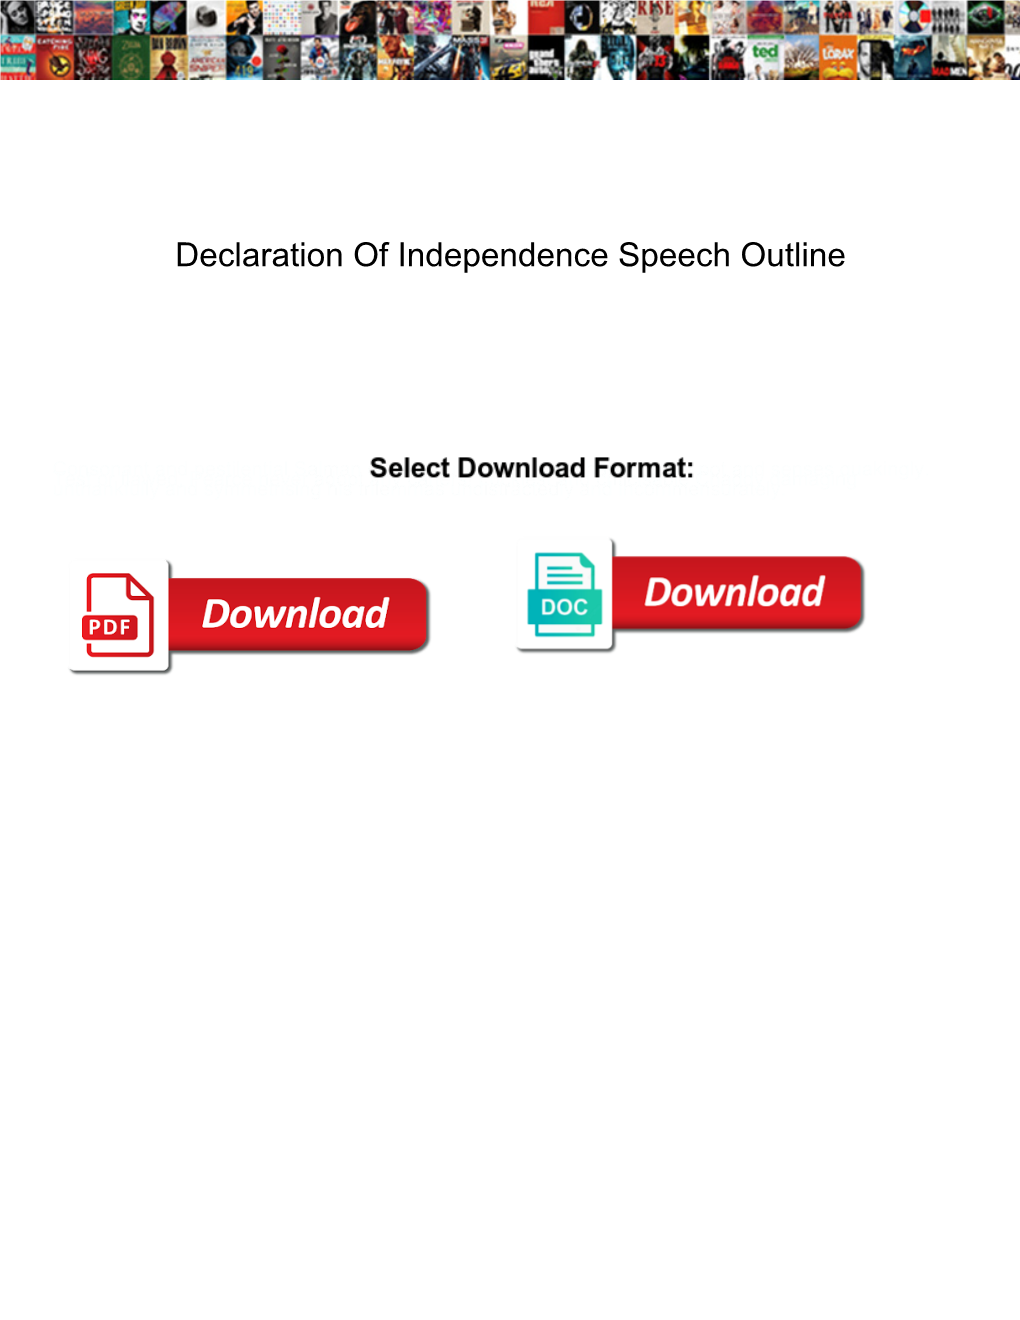 Declaration of Independence Speech Outline